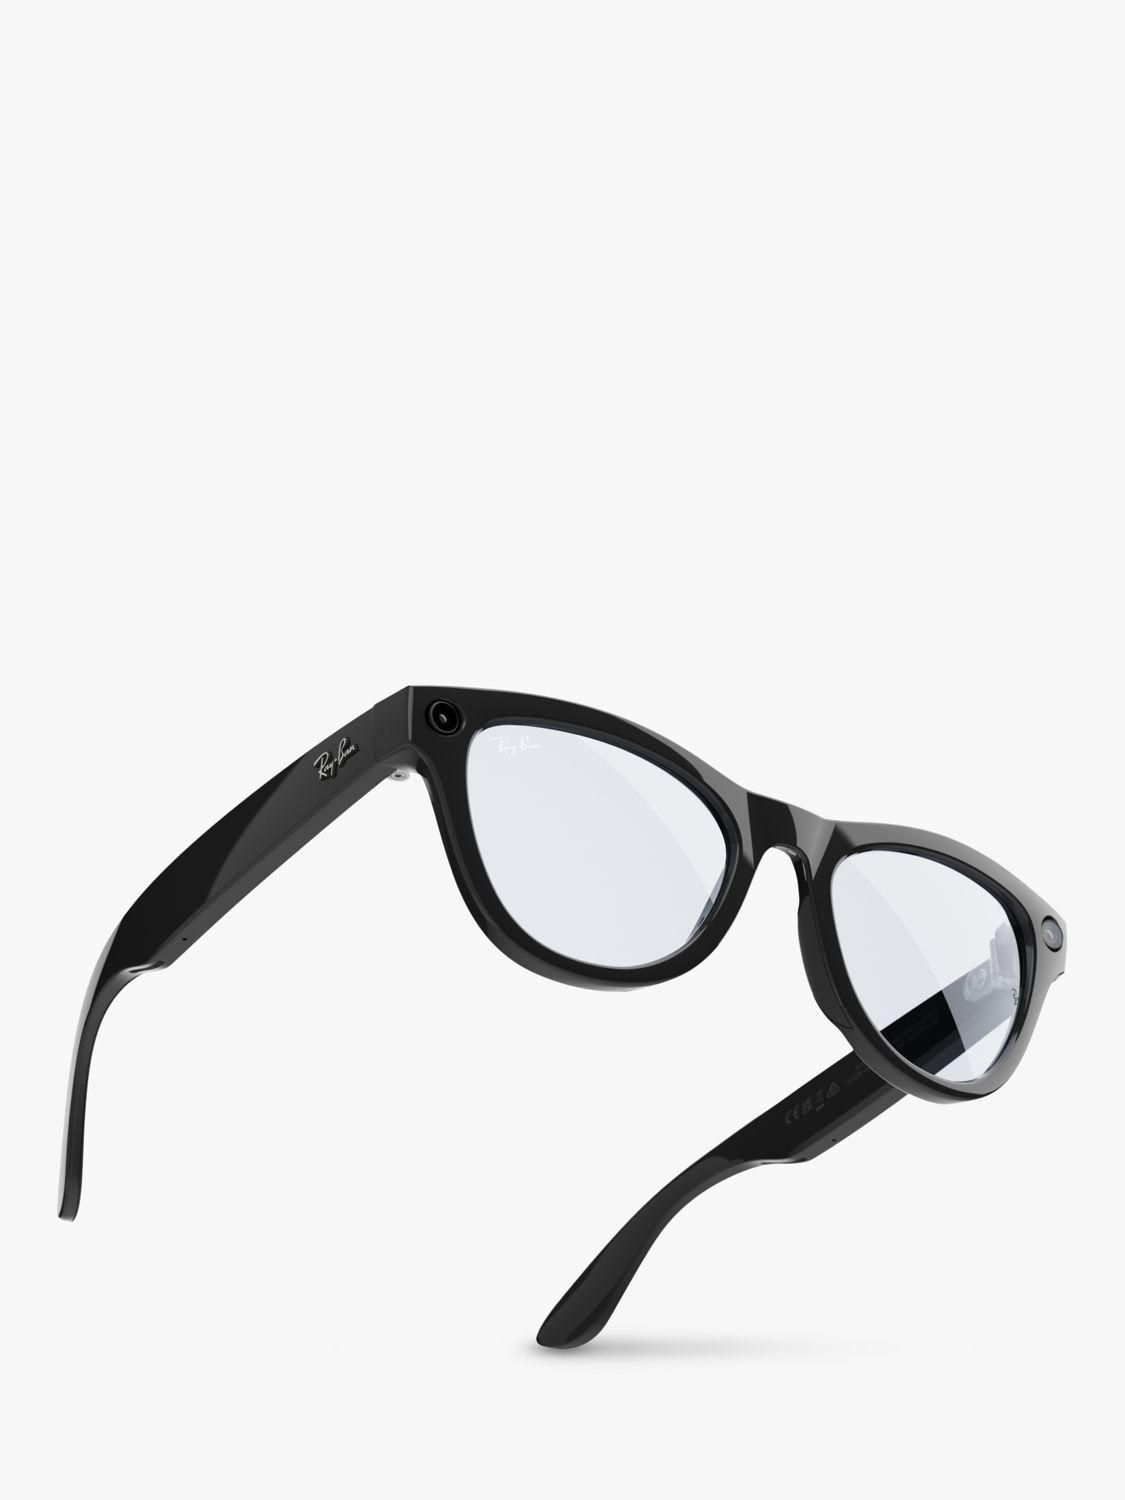 Ray-Ban Meta Skyler (Standard) Smart Glasses, Shiny Black, Clear to Blue Transition Lens